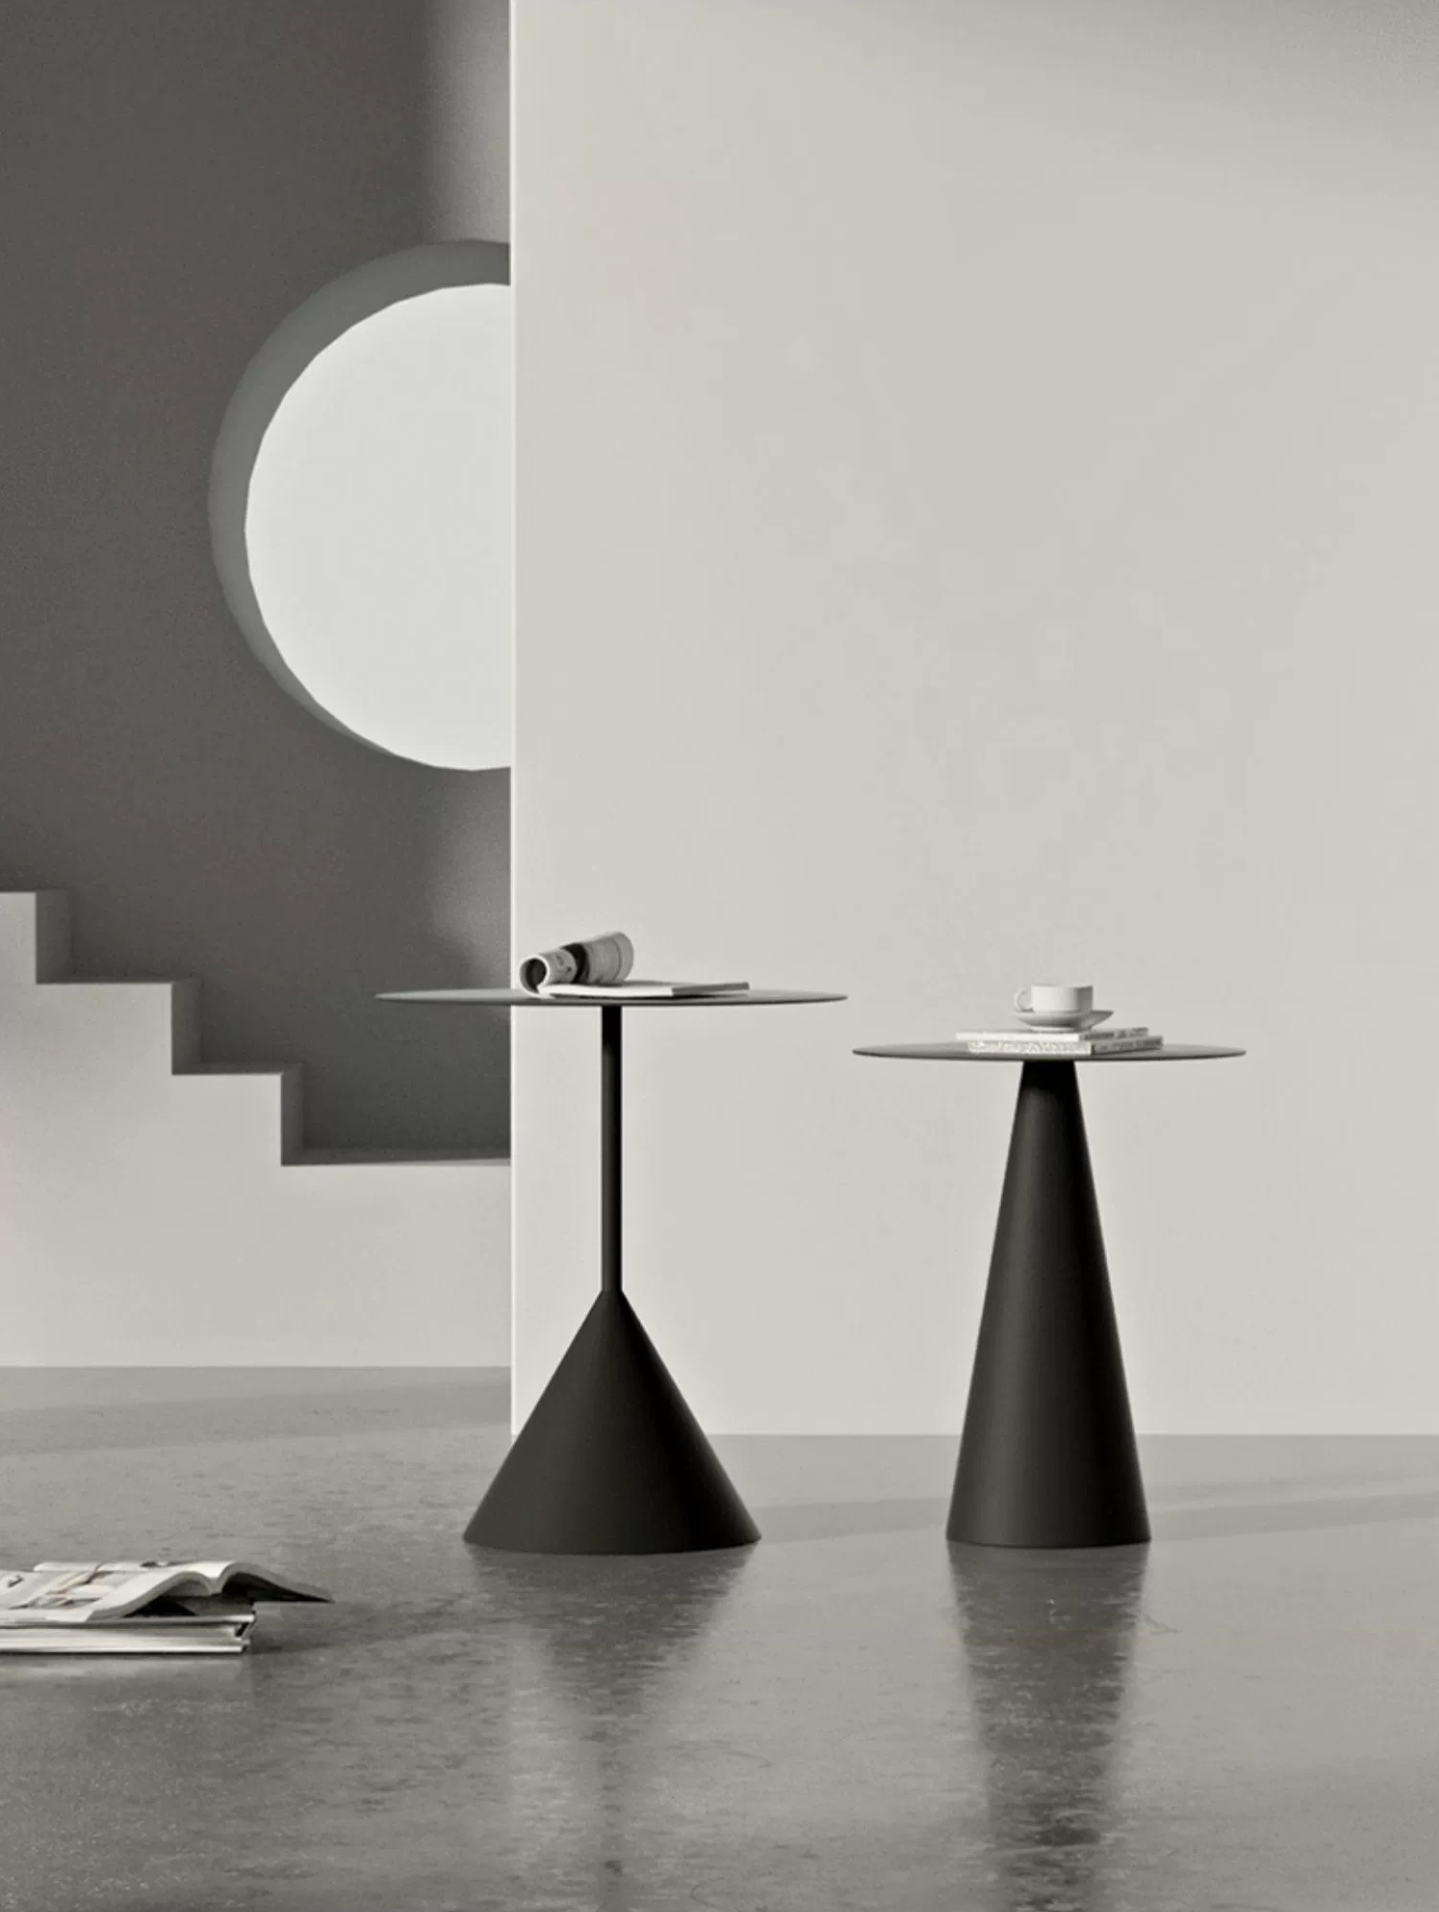 Simplicity Fusion Tea Table Set